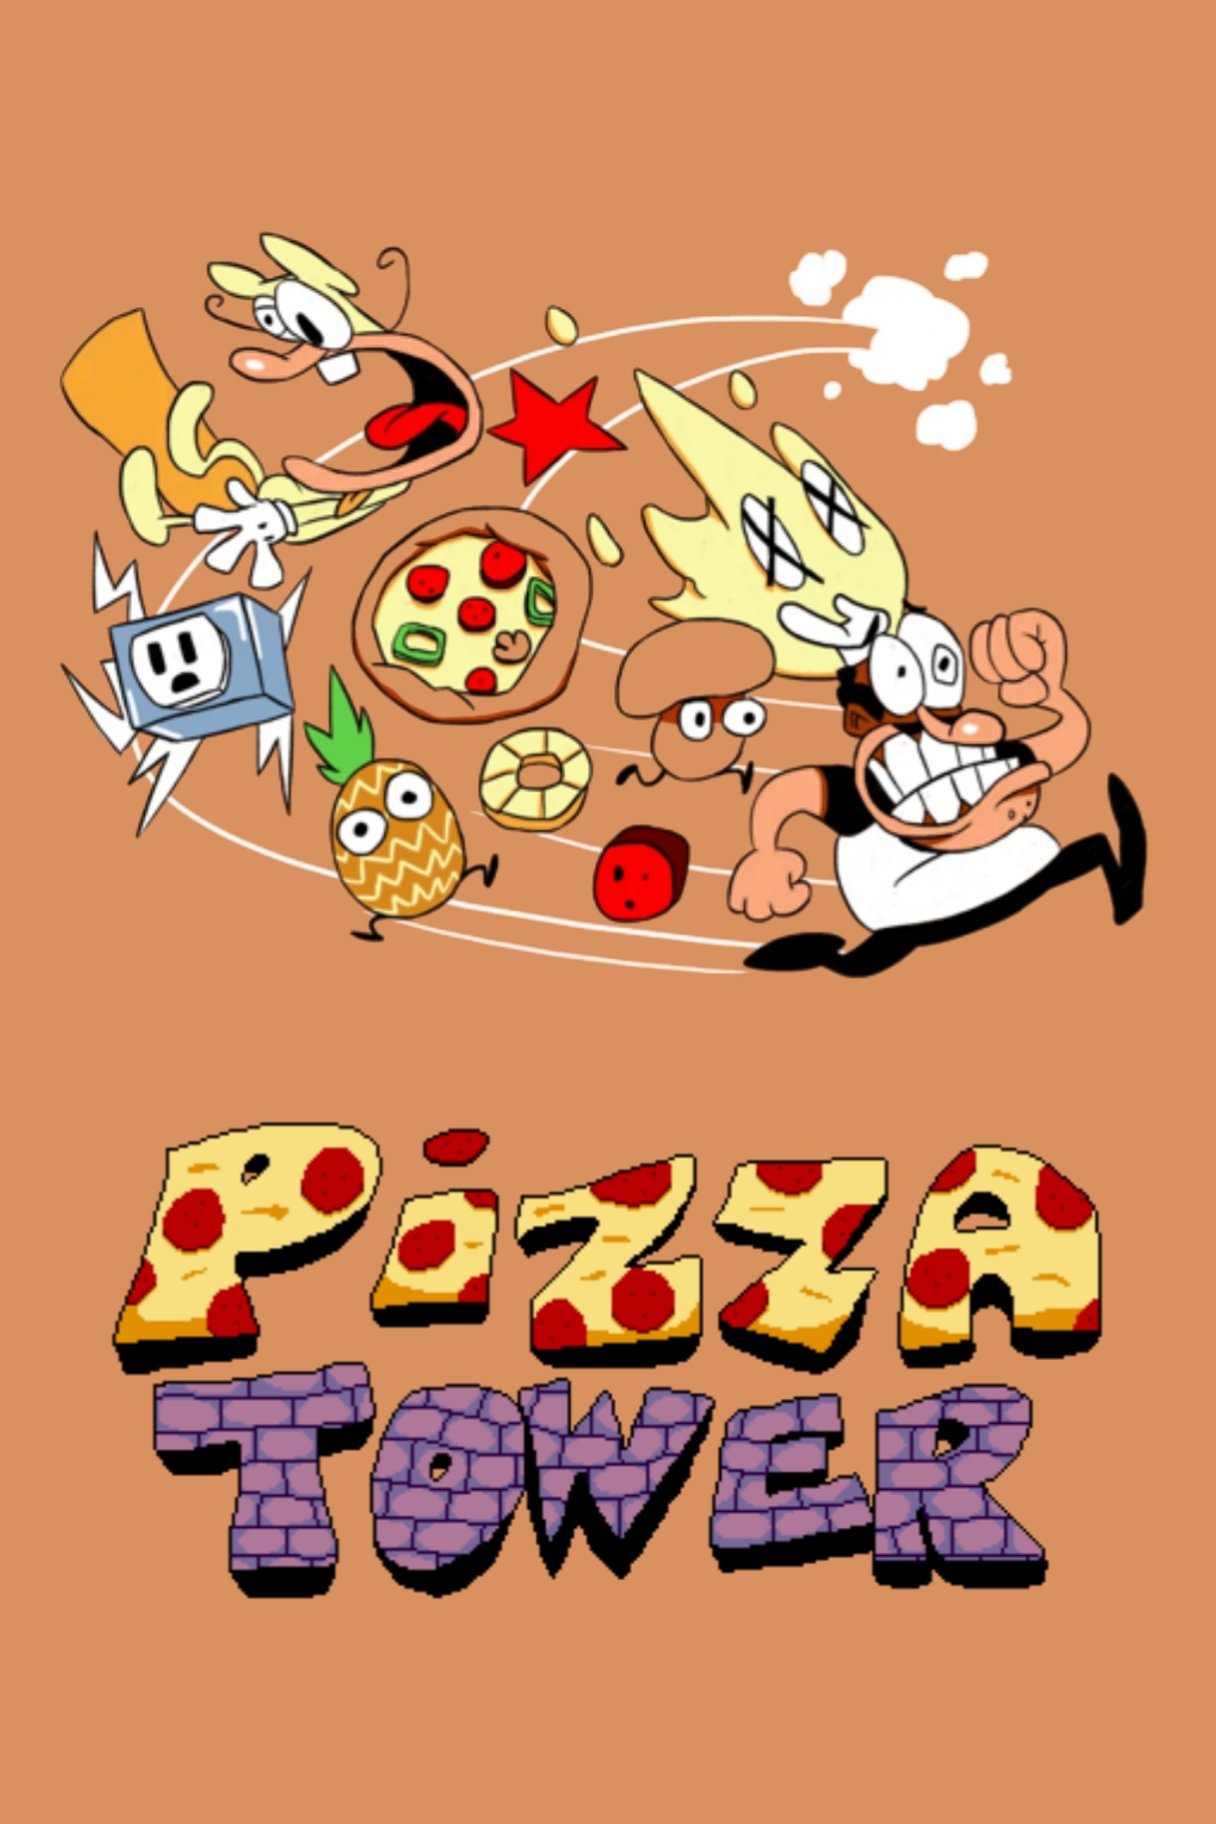 Pizza Tower - All Bosses & Ending 